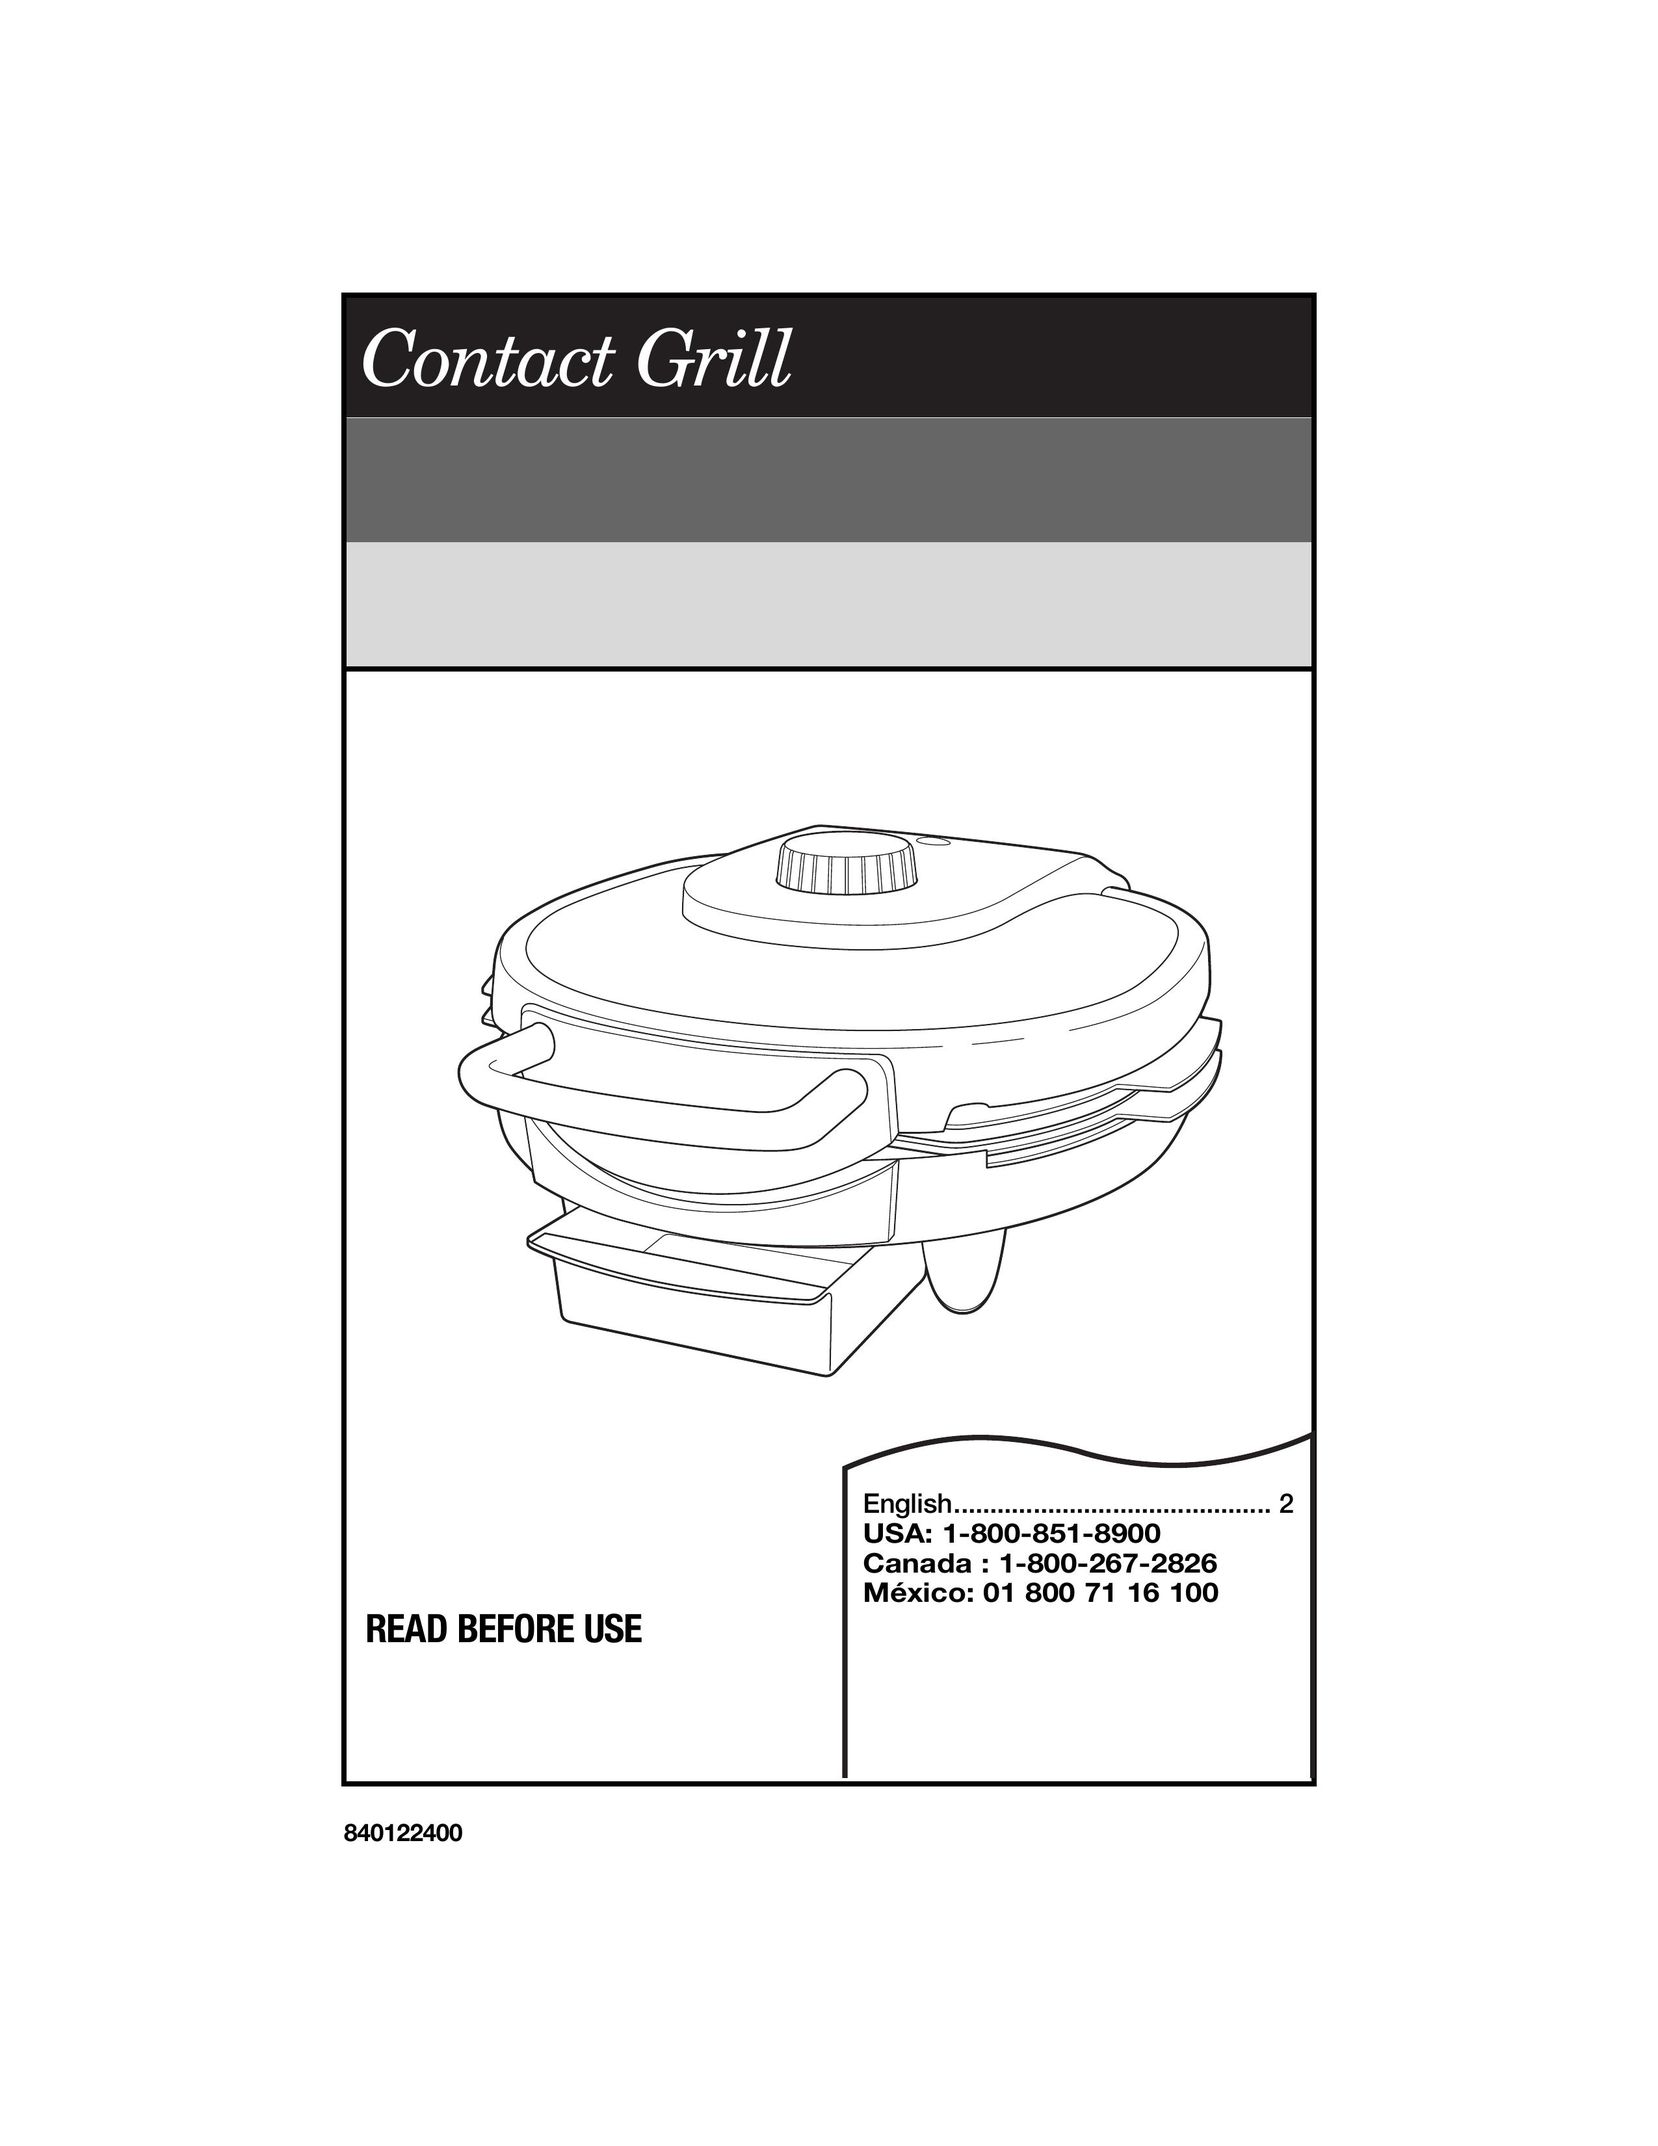 Hamilton Beach Contact Grill Kitchen Grill User Manual